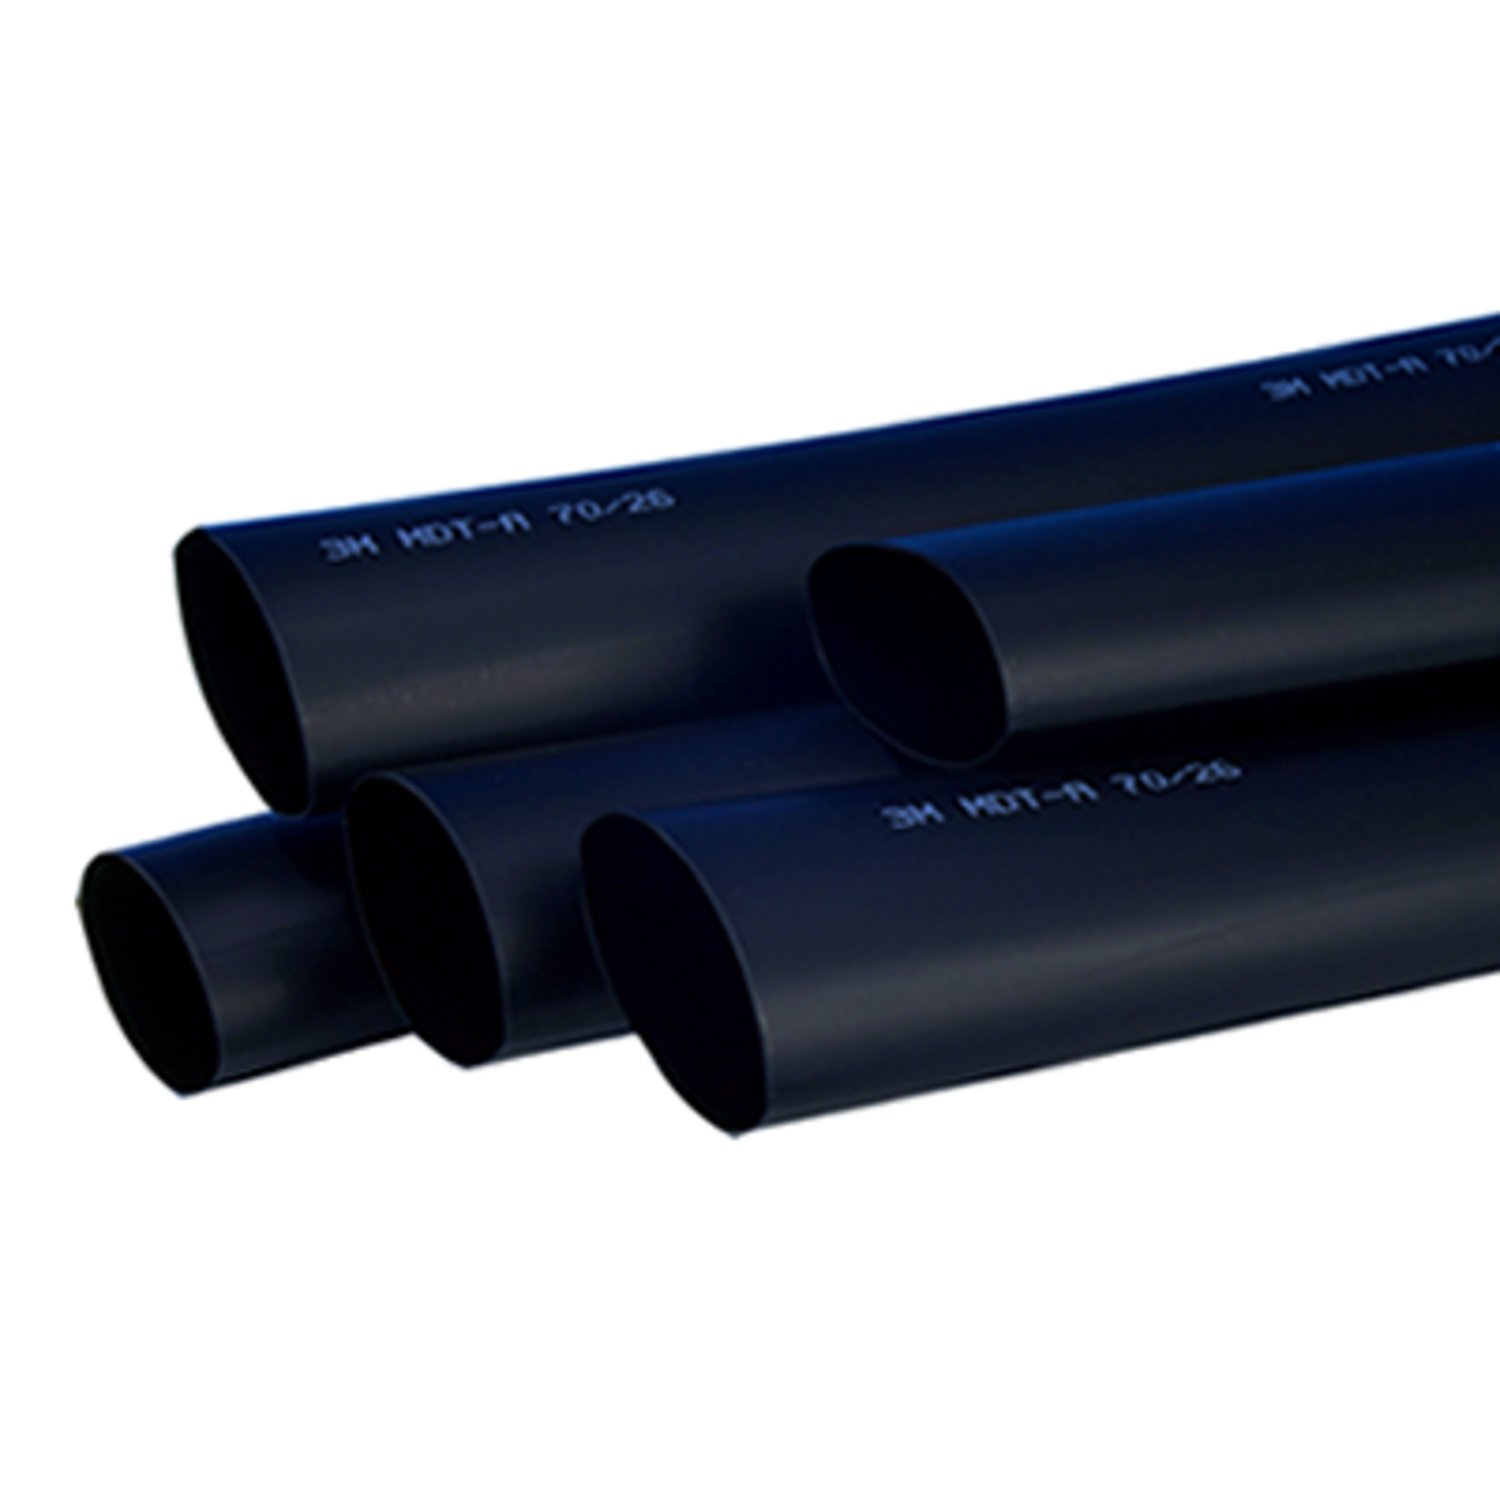 7010350346 - 3M Medium-Duty Adhesive-Lined Polyolefin Heat Shrink Tube MDT 3000
Black 6-in pieces, 100/Case